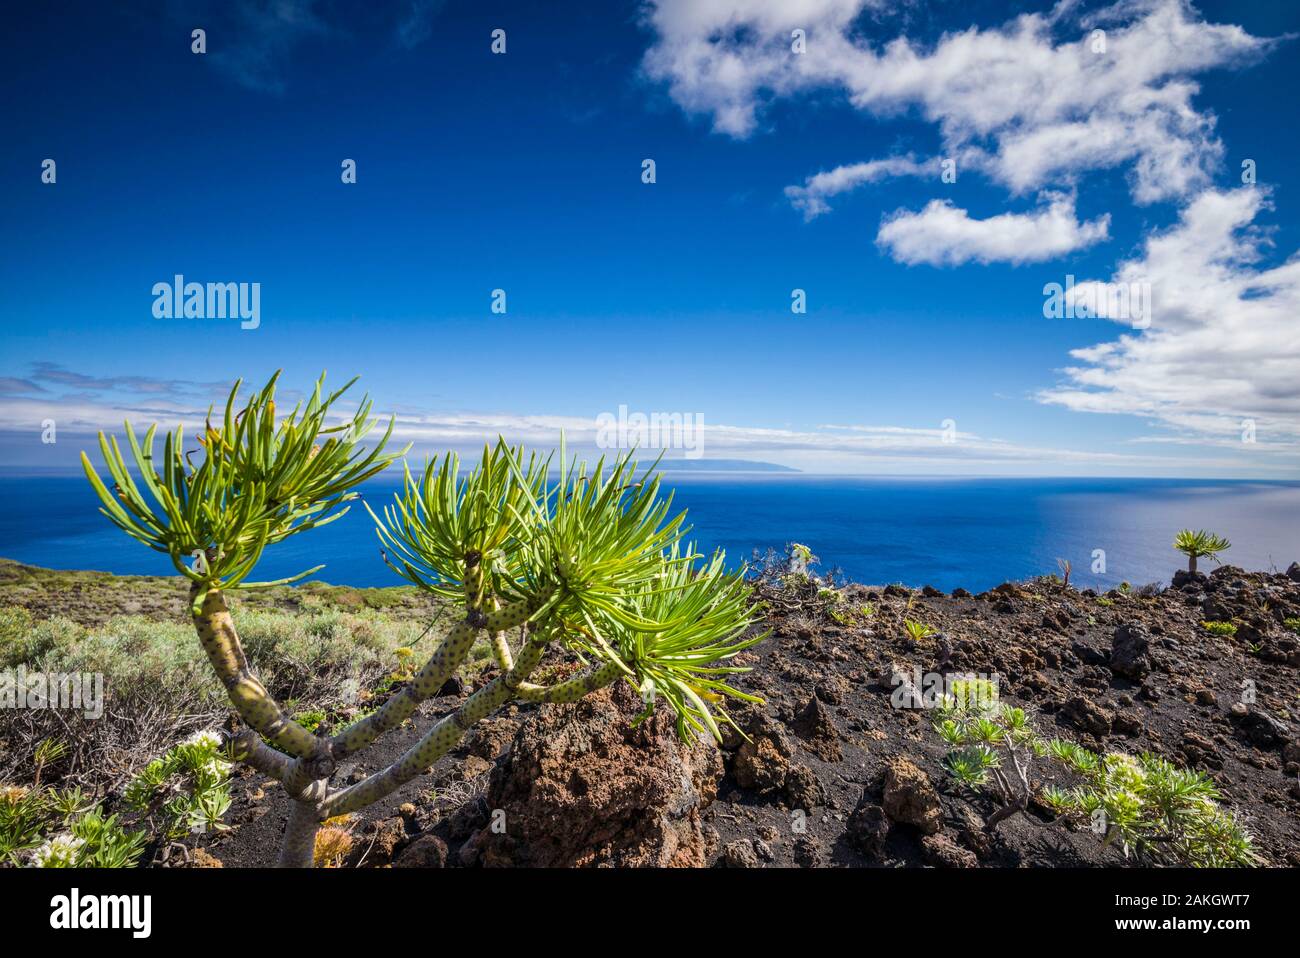 Spain, Canary Islands, La Palma Island, Fuencaliente de la Palma, Punta de Fuencaliente, volcanic landscape and view towards La Gomera Island Stock Photo